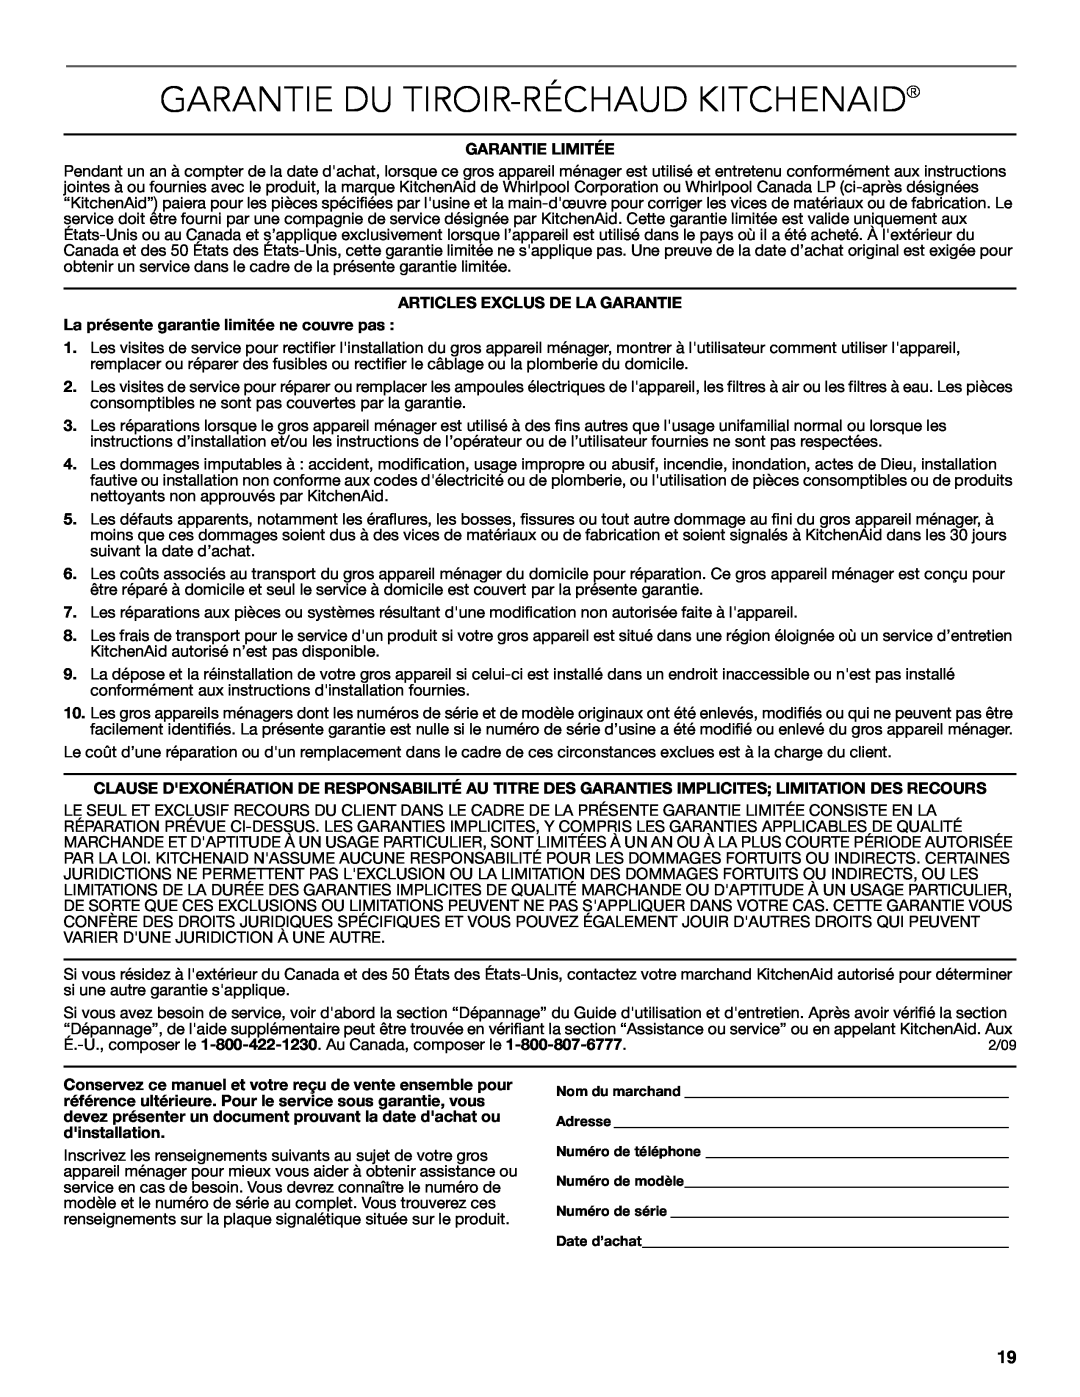 KitchenAid KEWS145, KEWS175 manual Garantie Du Tiroir-Réchaud Kitchenaid, Garantie Limitée, Articles Exclus De La Garantie 